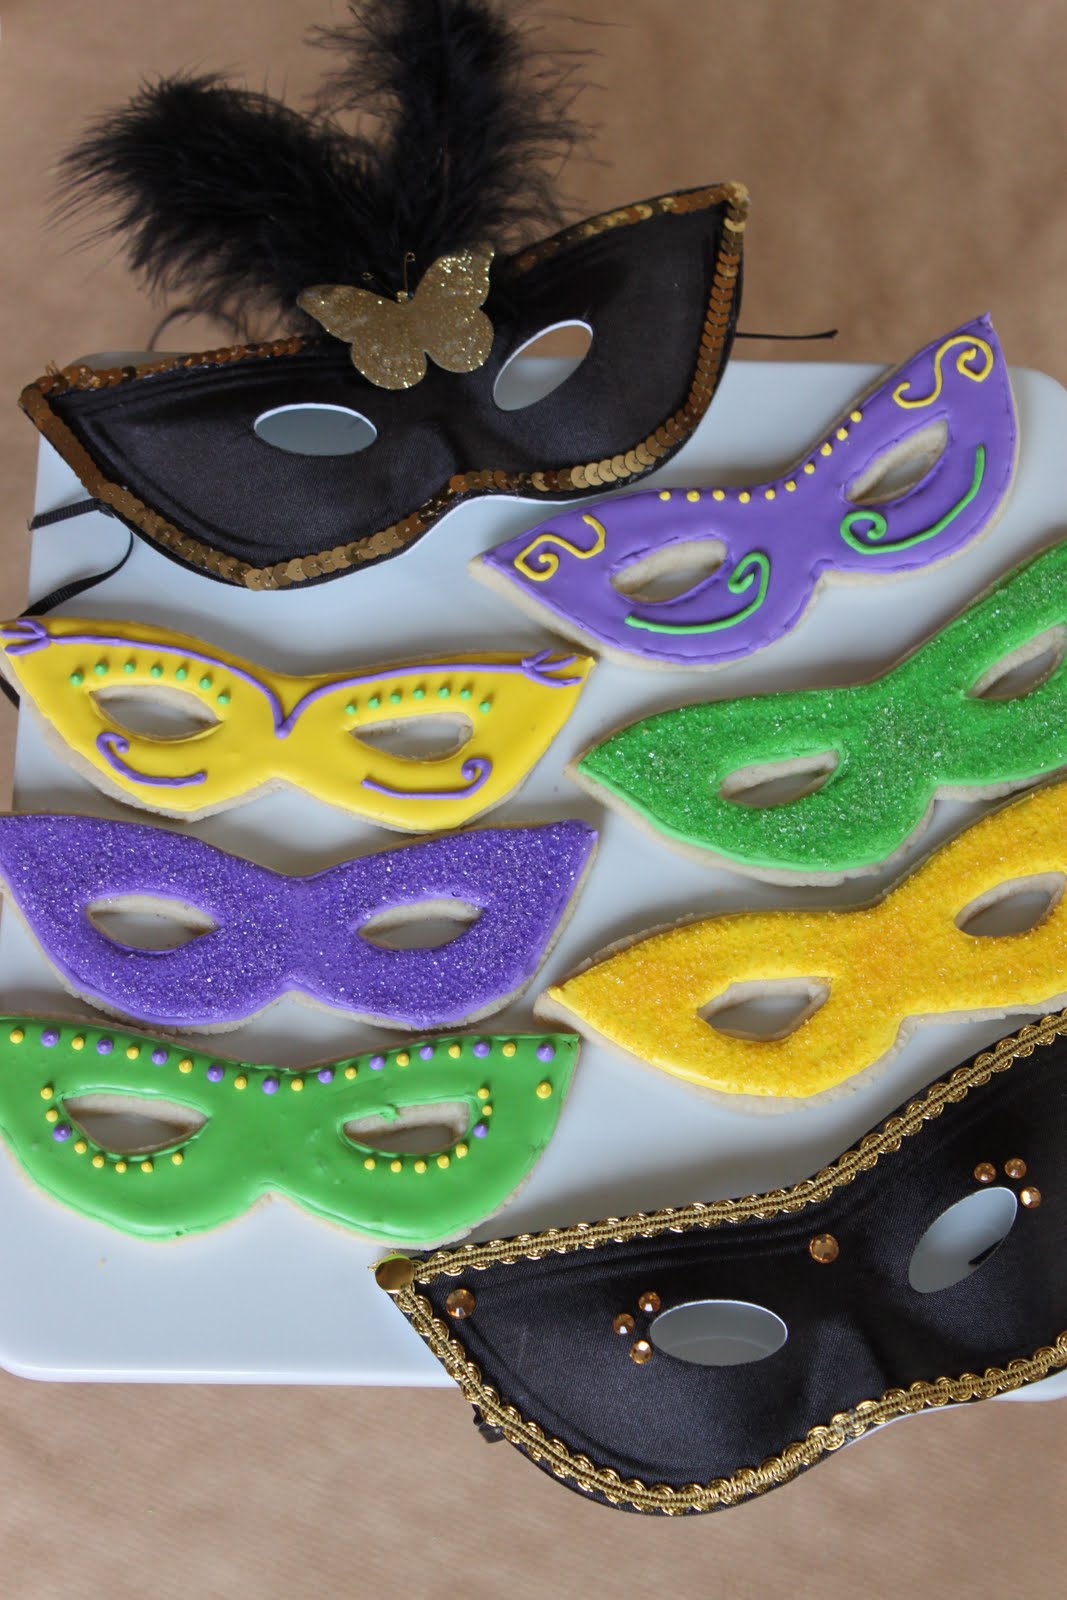 Crave. Indulge. Satisfy.: Mardi Gras Mask Cookies